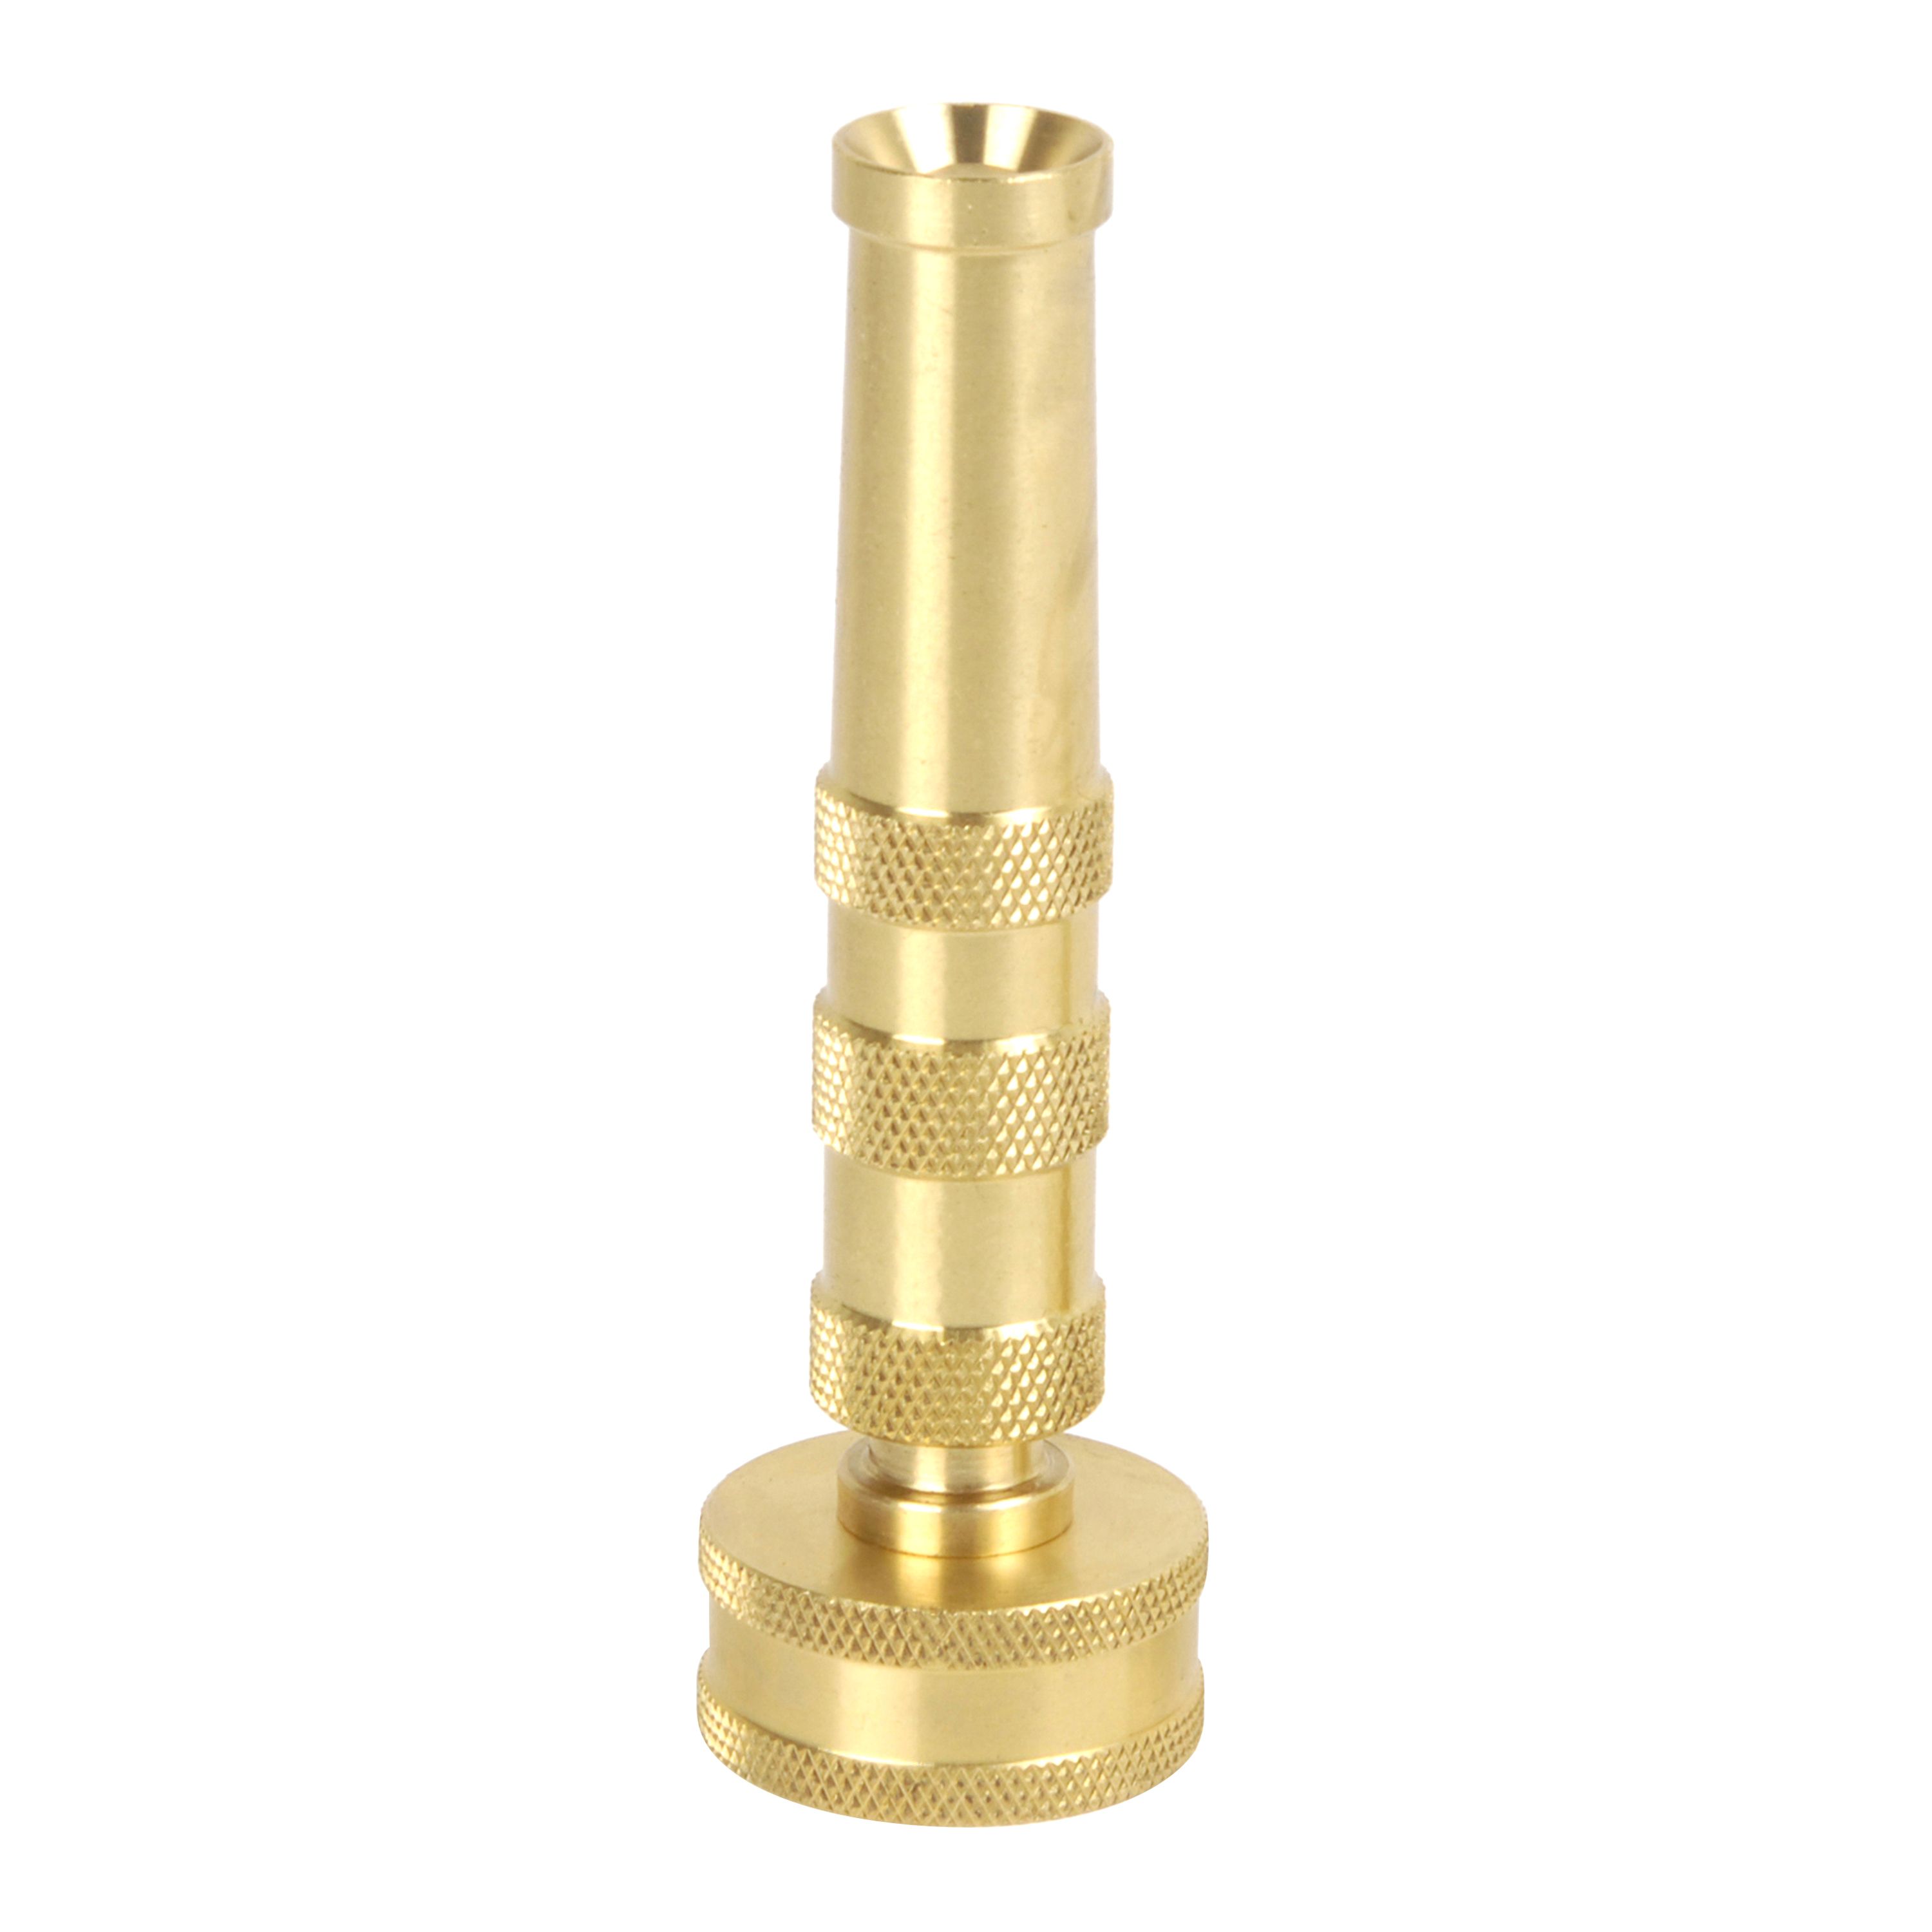 Details about   Solid Brass Garden Spray Nozzle 4" Adjustable Twist Water Hose Nozzle Sprayer 